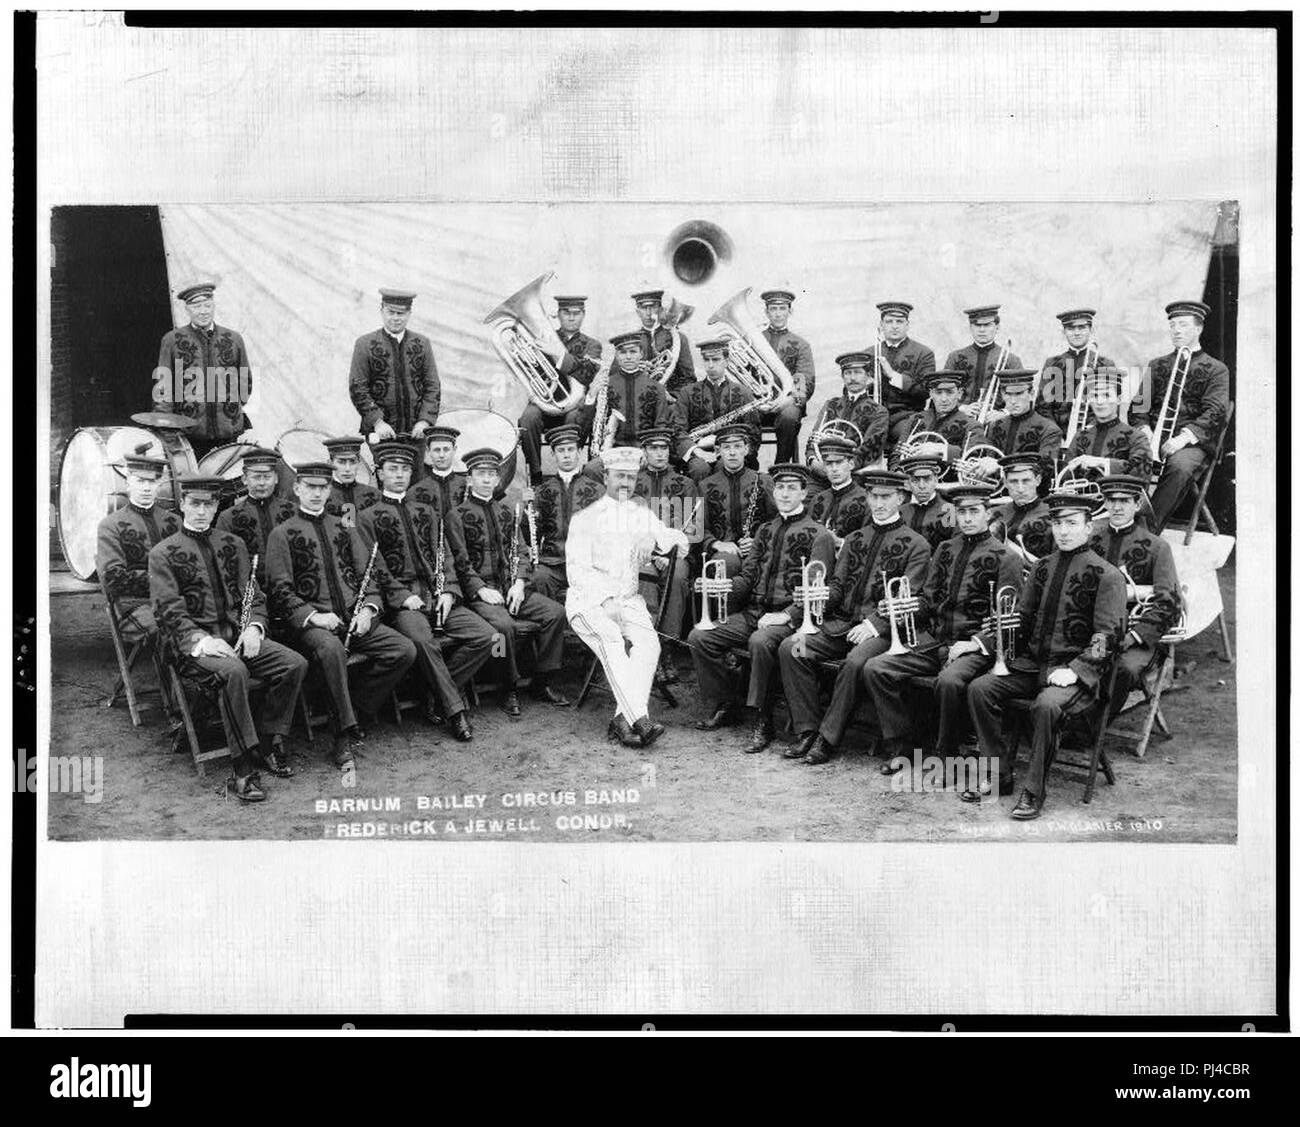 Barnum Bailey Circus band. Friedrich A. Jewell condr. Stockfoto